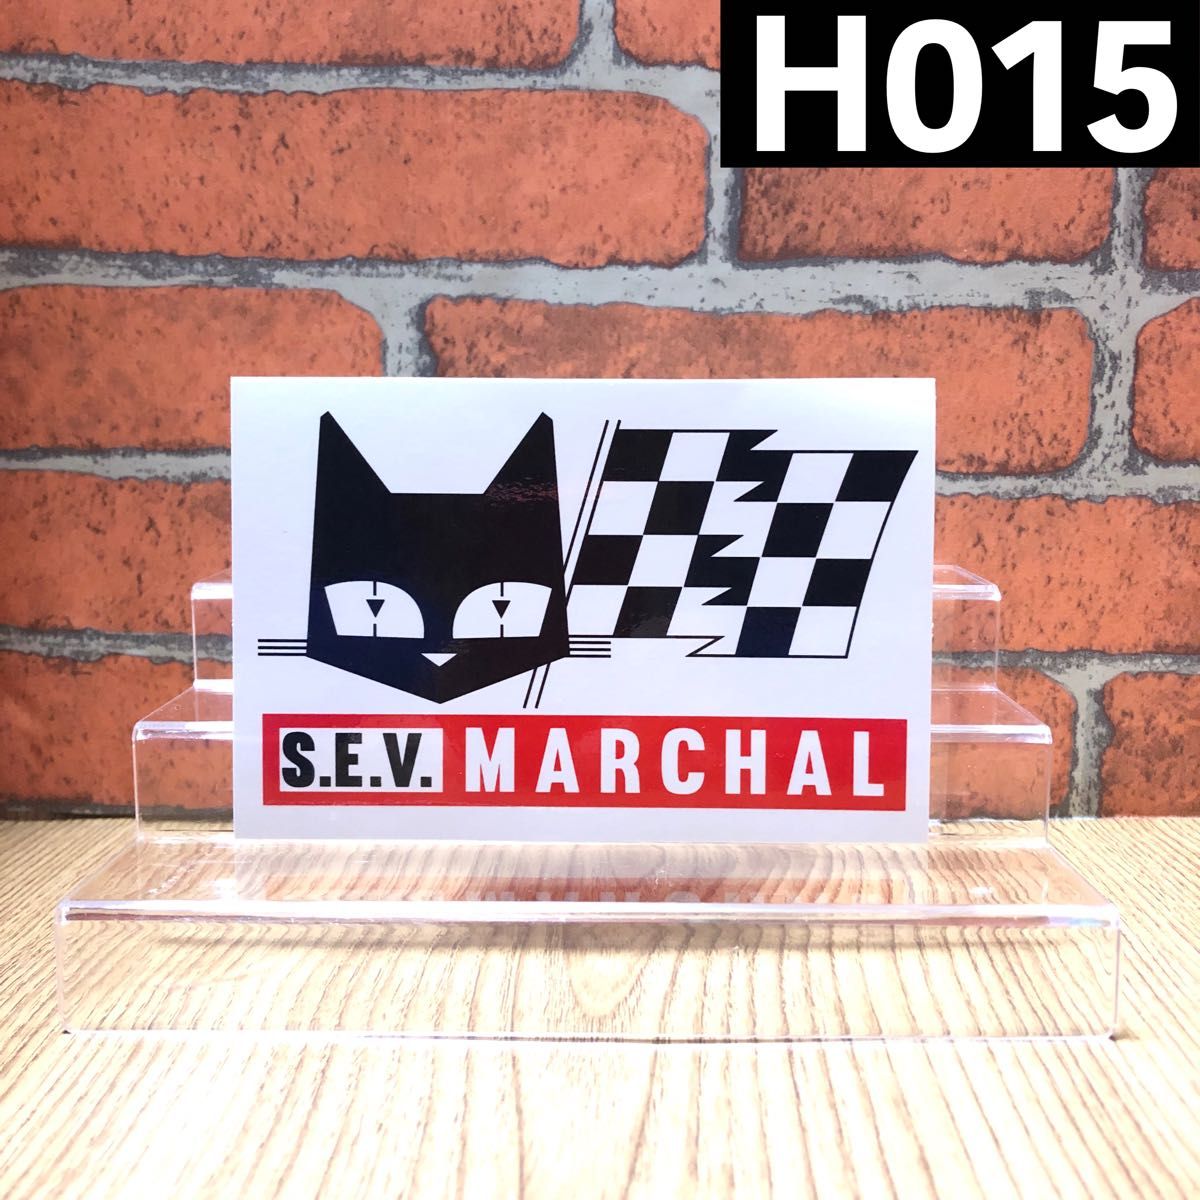 【H015】S.E.V. MARCHAL マーシャル ステッカー【匿名発送 】